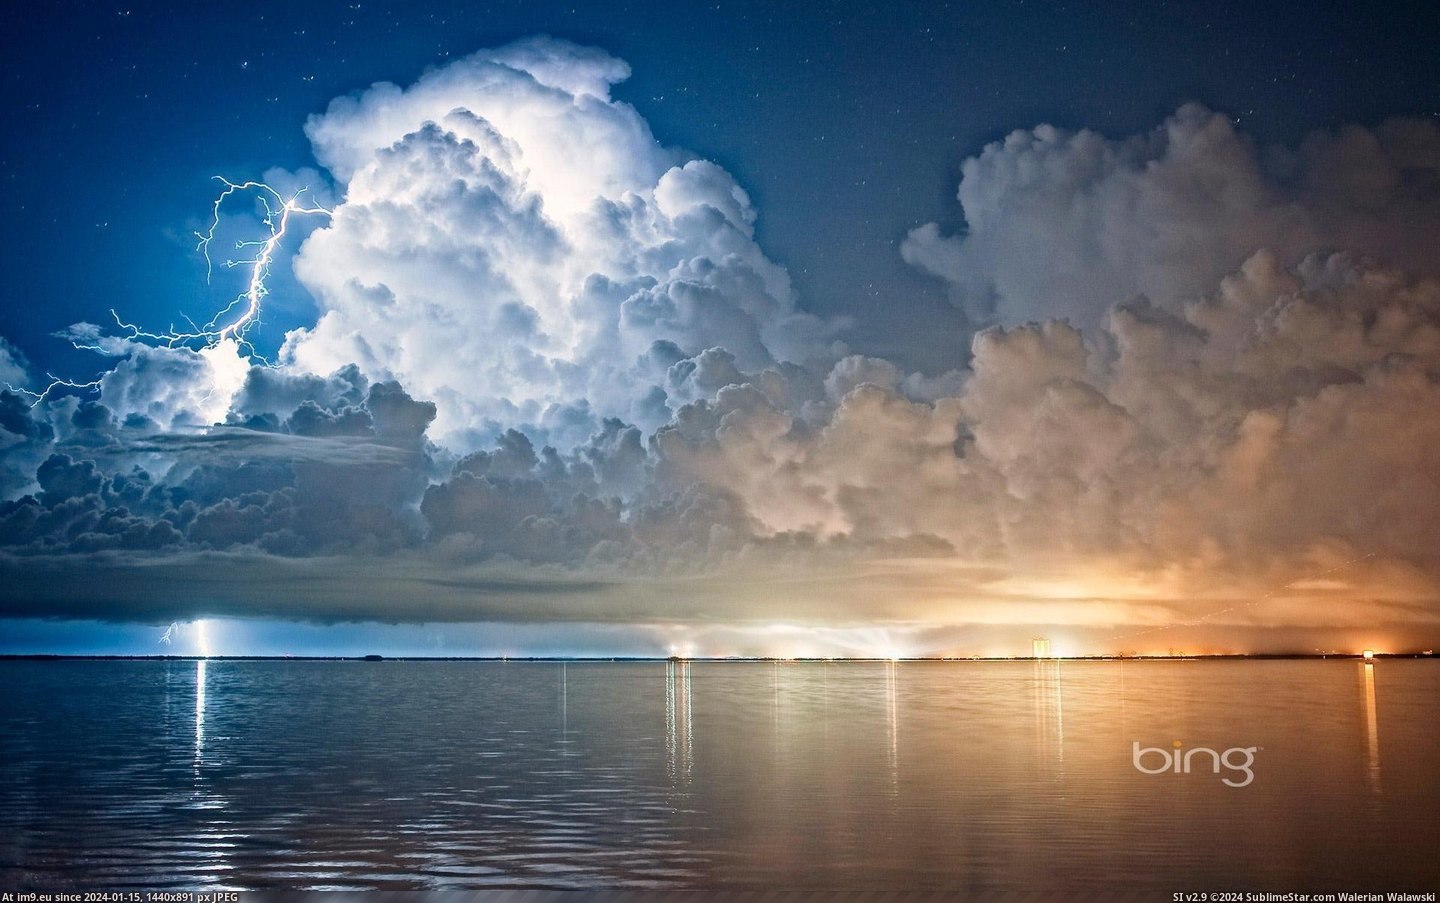 Lightning strike, Cape Canaveral, Florida (in Bing Photos November 2012)